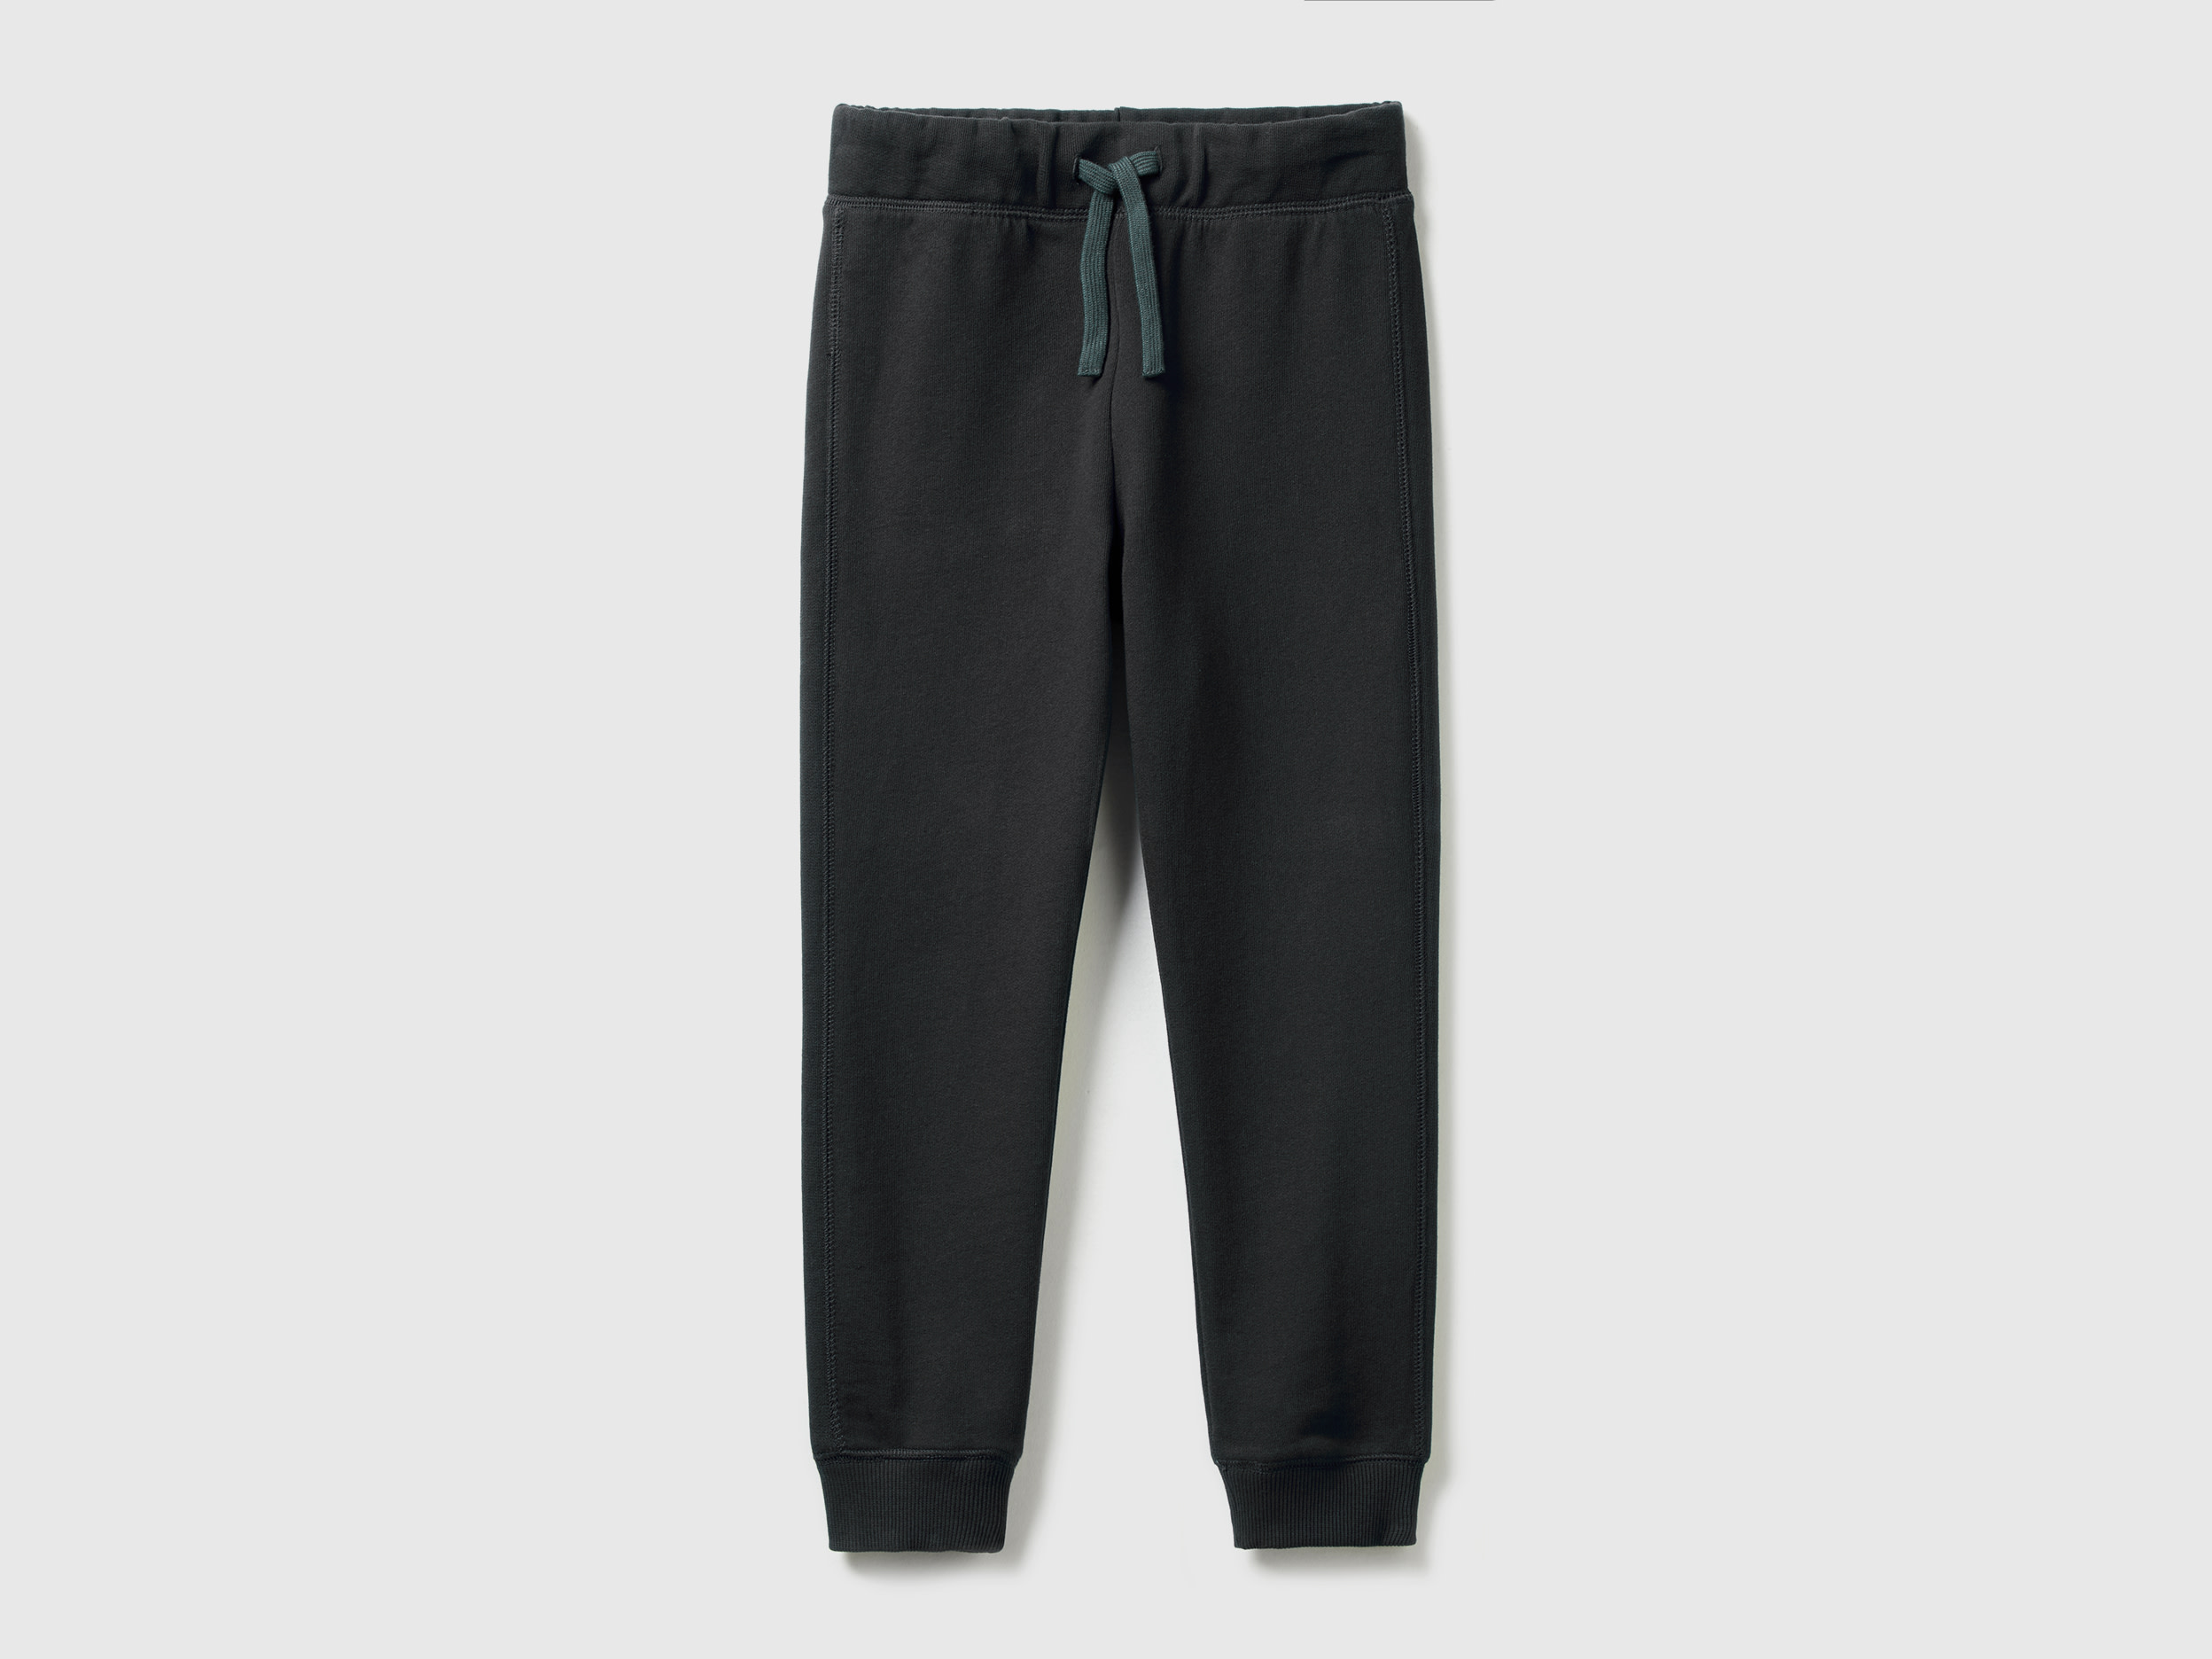 Benetton, 100% Cotton Sweatpants, size 3XL, Black, Kids